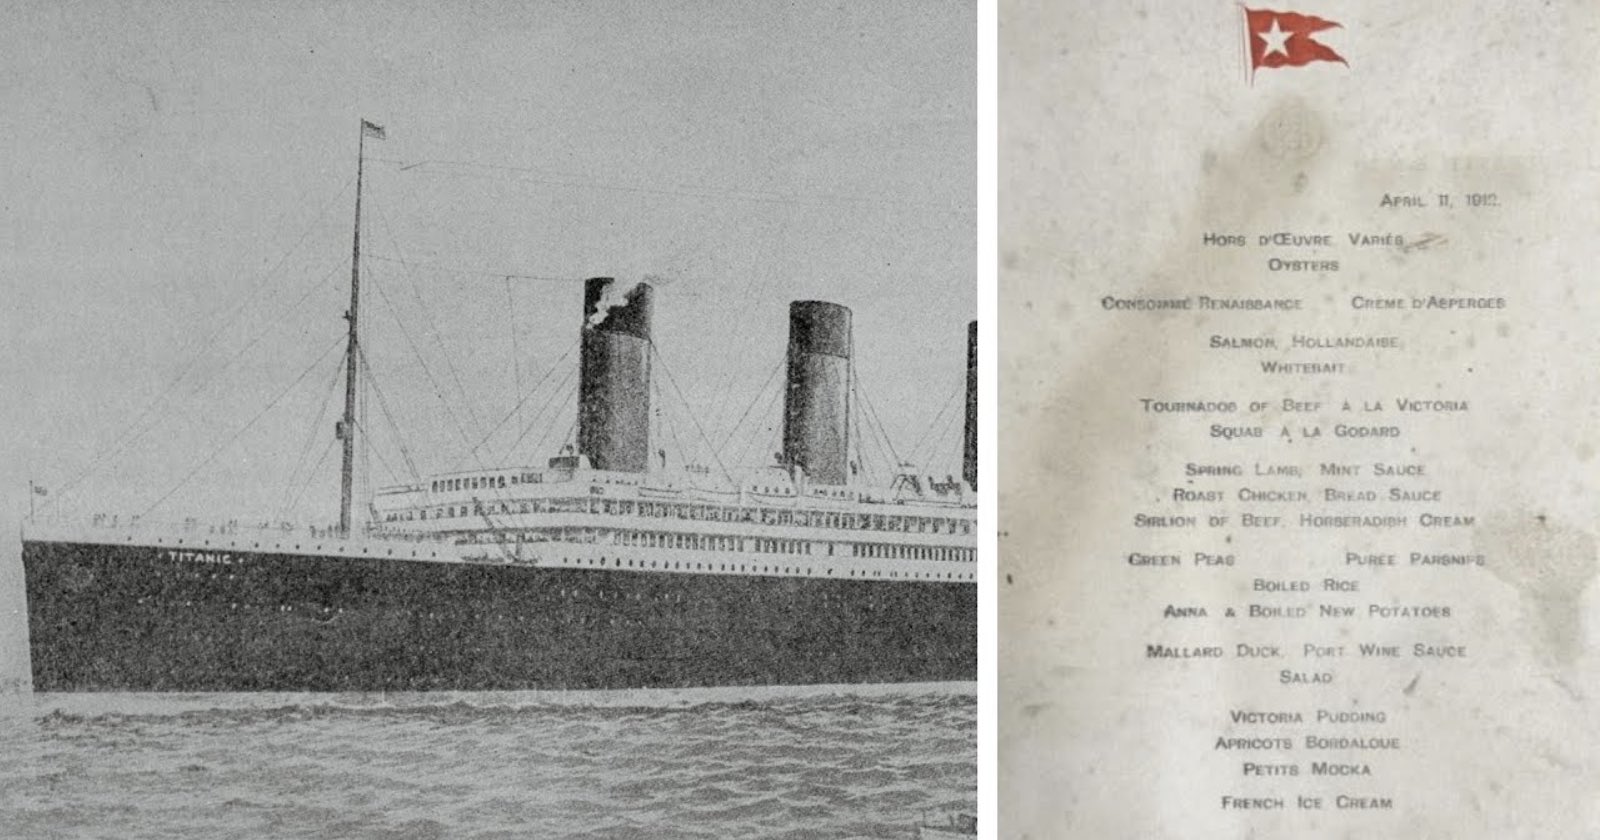 Titanic Dinner Menu Found in Photo Album Sells For $100,000